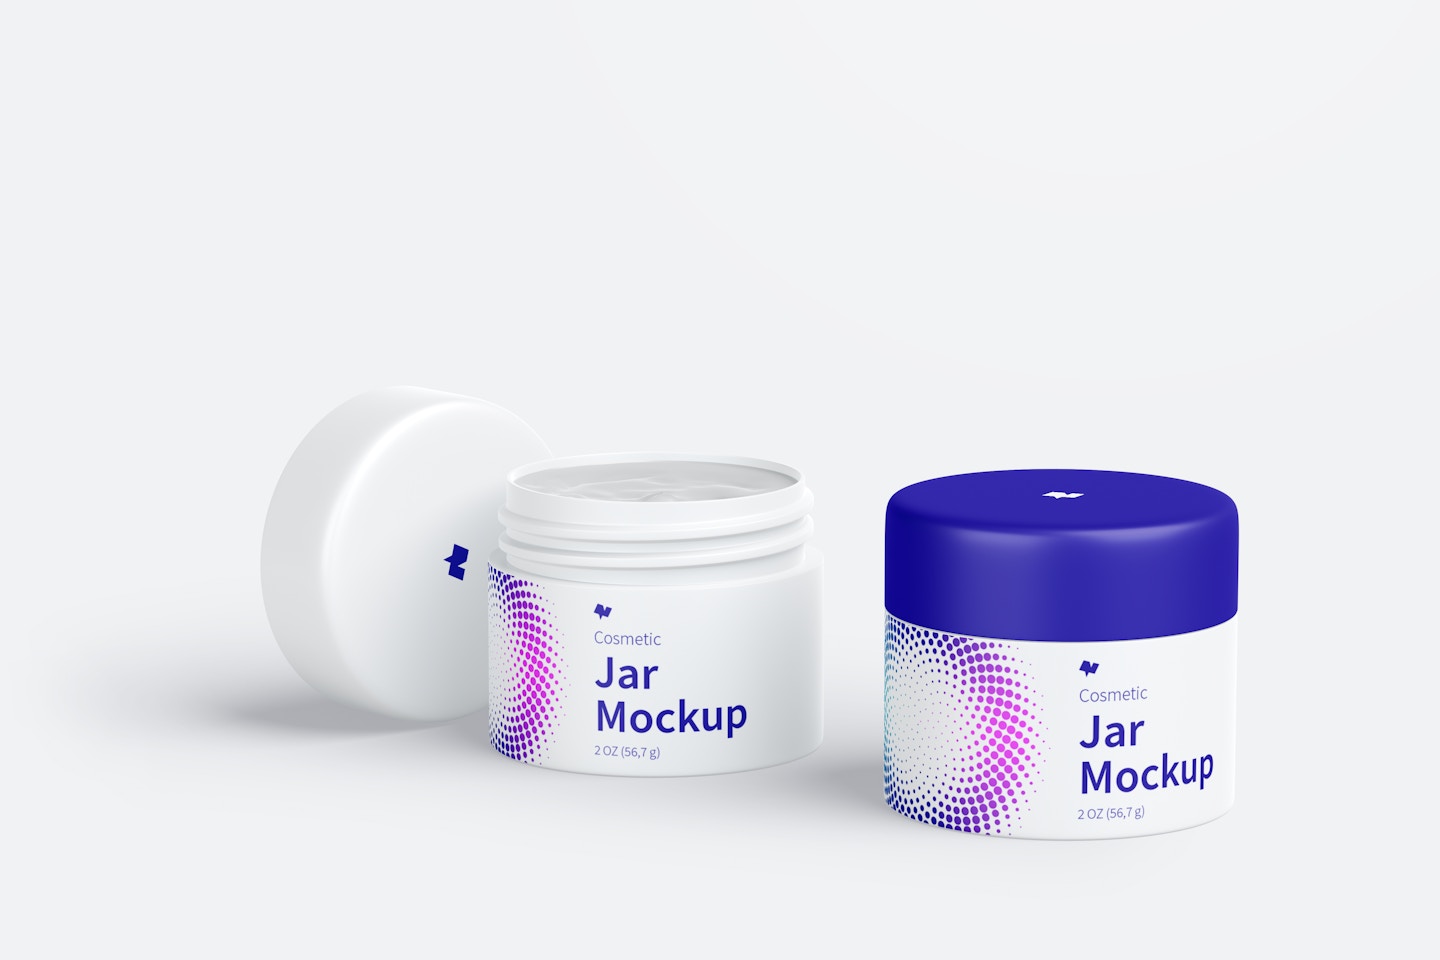 Cosmetic Jar Mockup 02